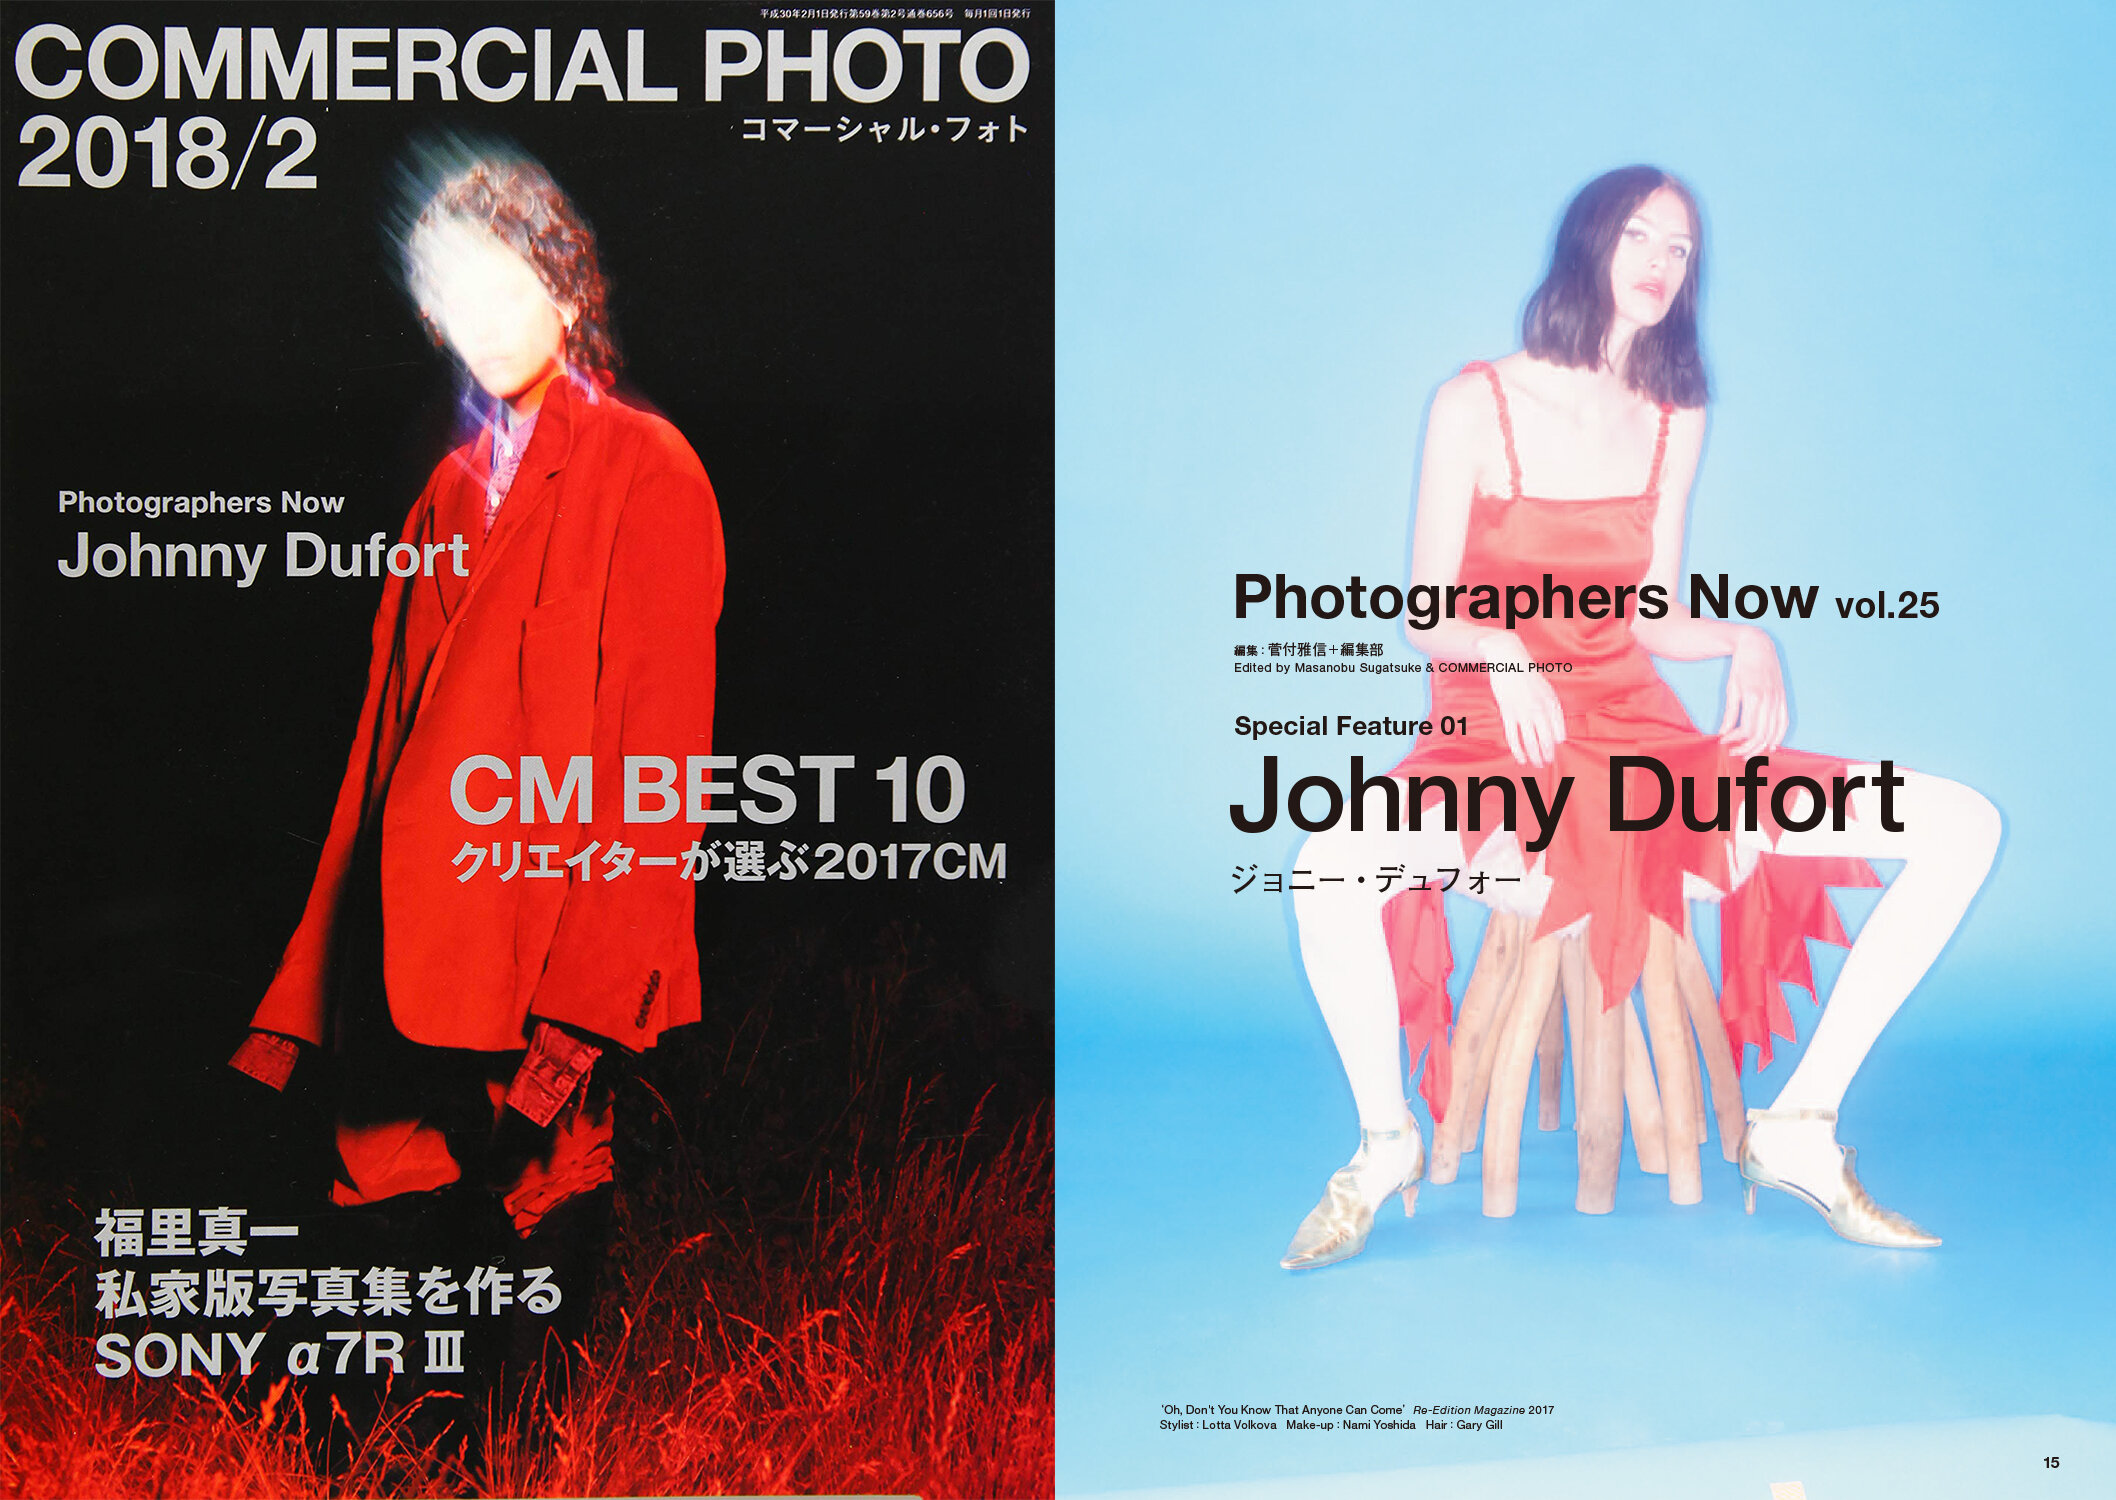 Photographers Now: Johnny Dufort